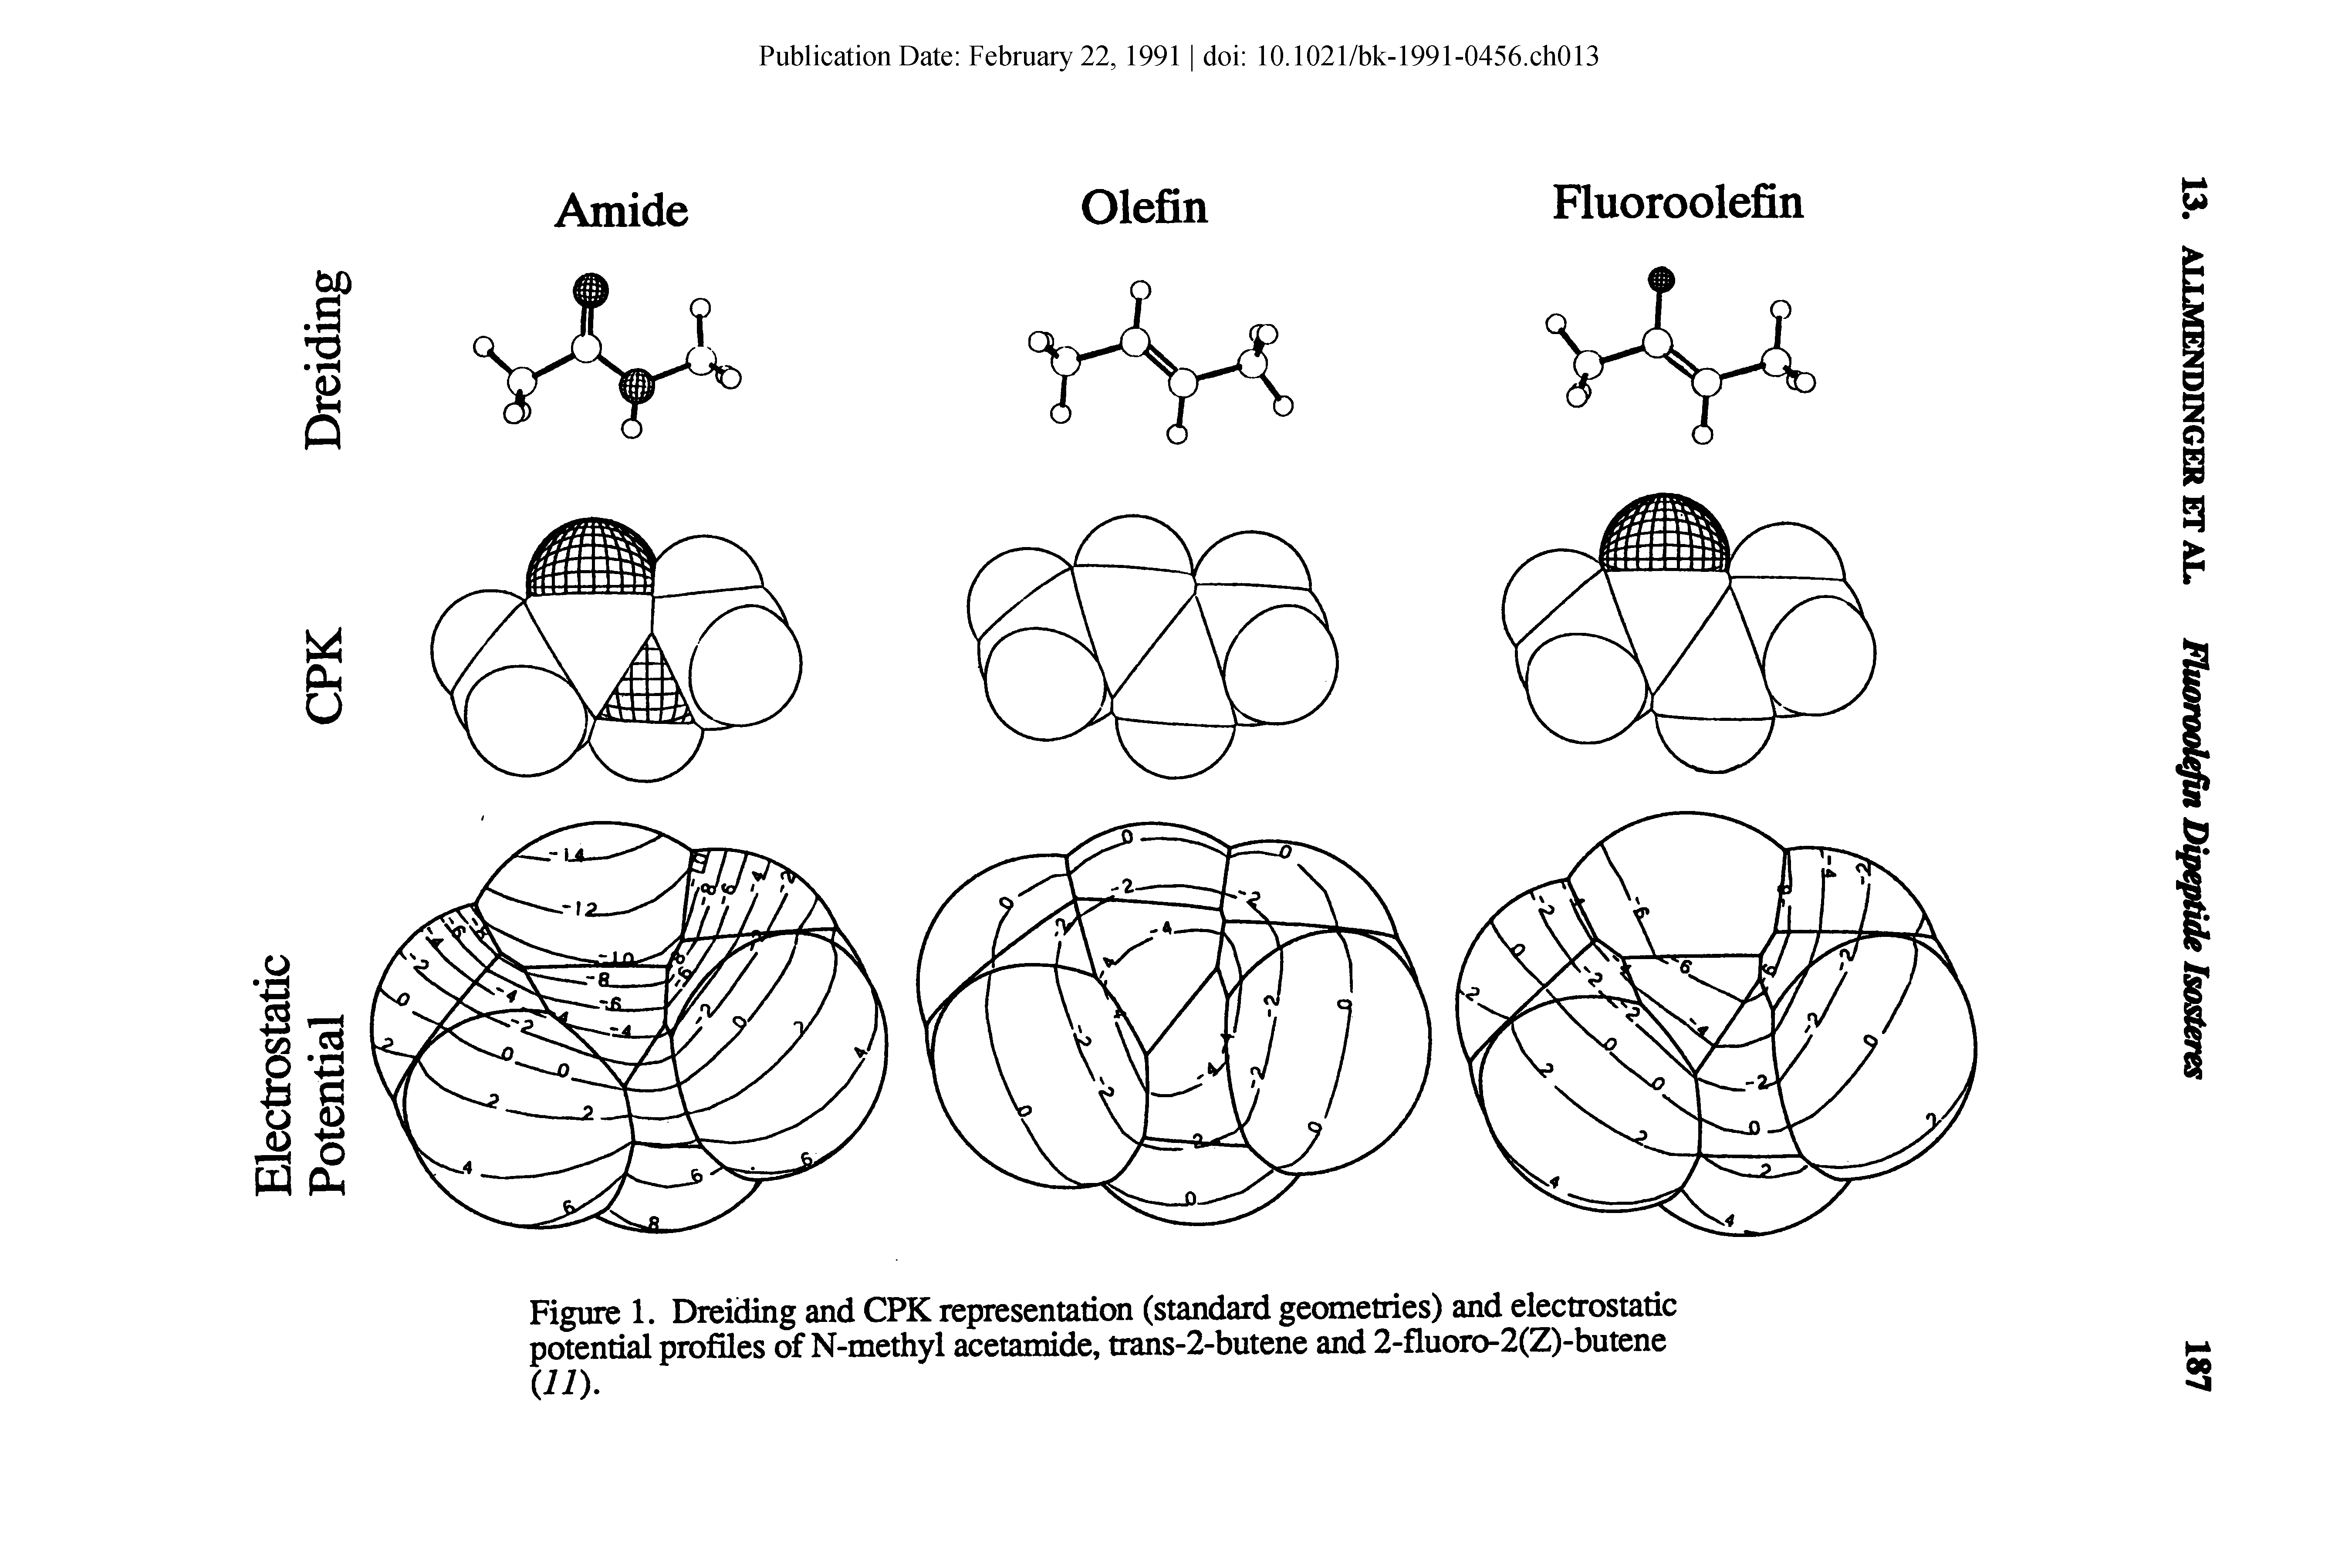 Figure 1. Dreiding and CPK representation (standard geometries) and electrostatic potential profiles of N-methyl acetamide, trans-2-butene and 2-fluoro-2(Z)-butene...